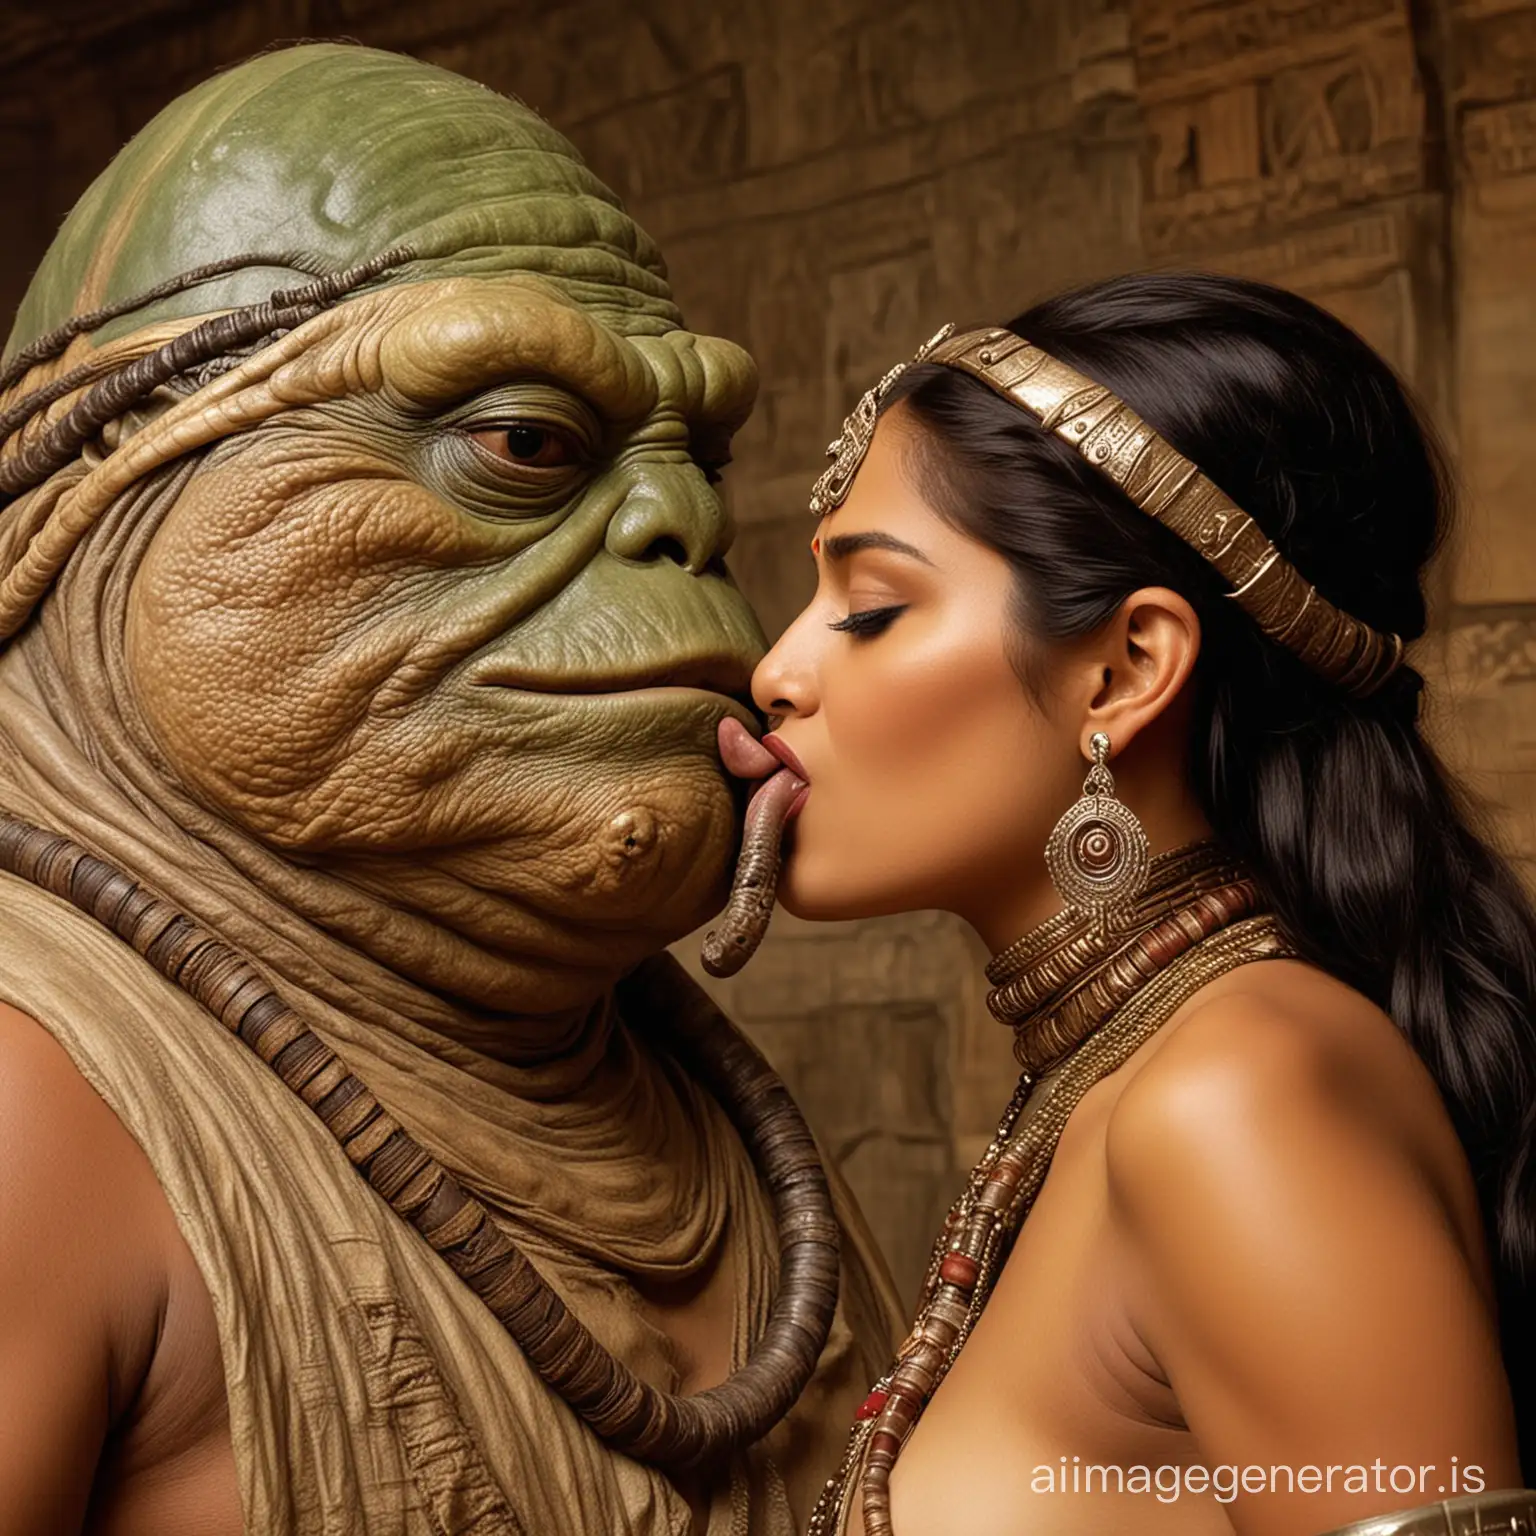 Jabba-the-Hutt-Embracing-Enslaved-Indian-Princess-with-Serpent-Tongue-Kiss